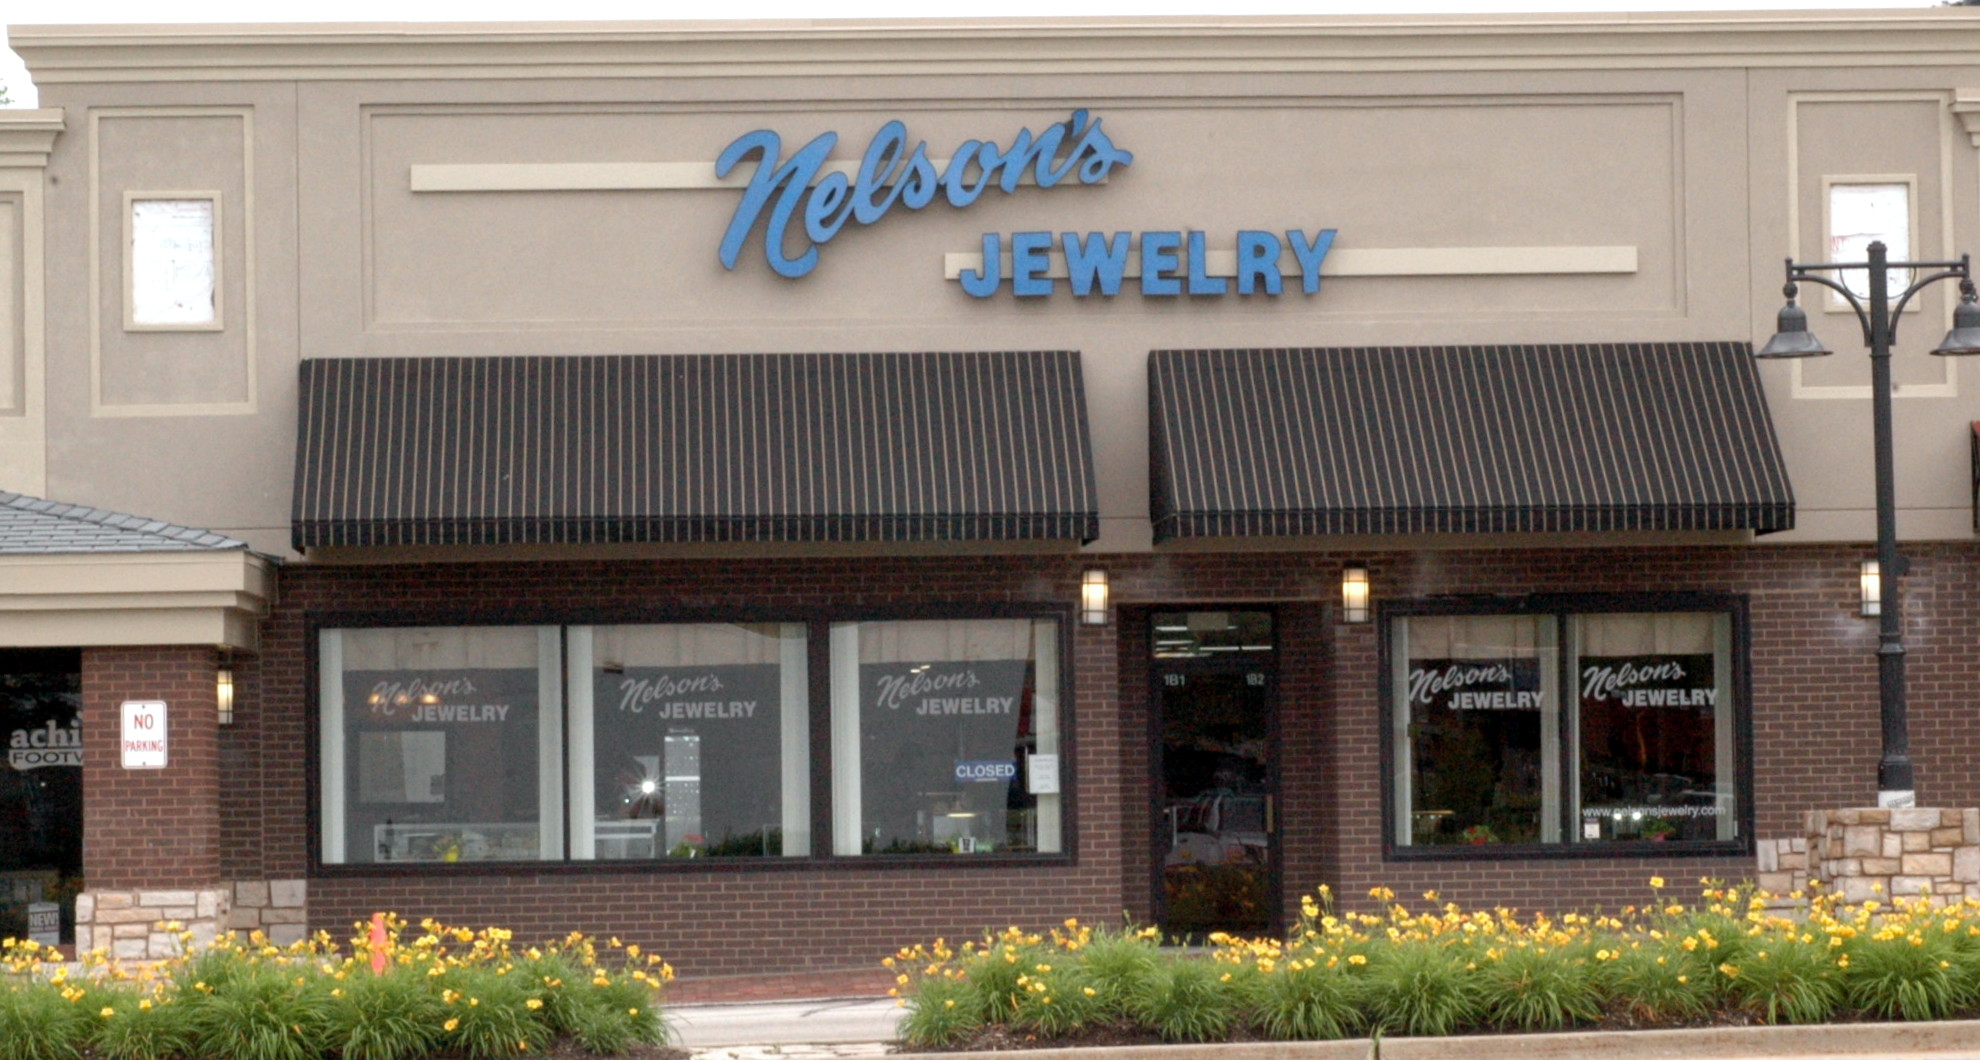 Nelson's Jewelry